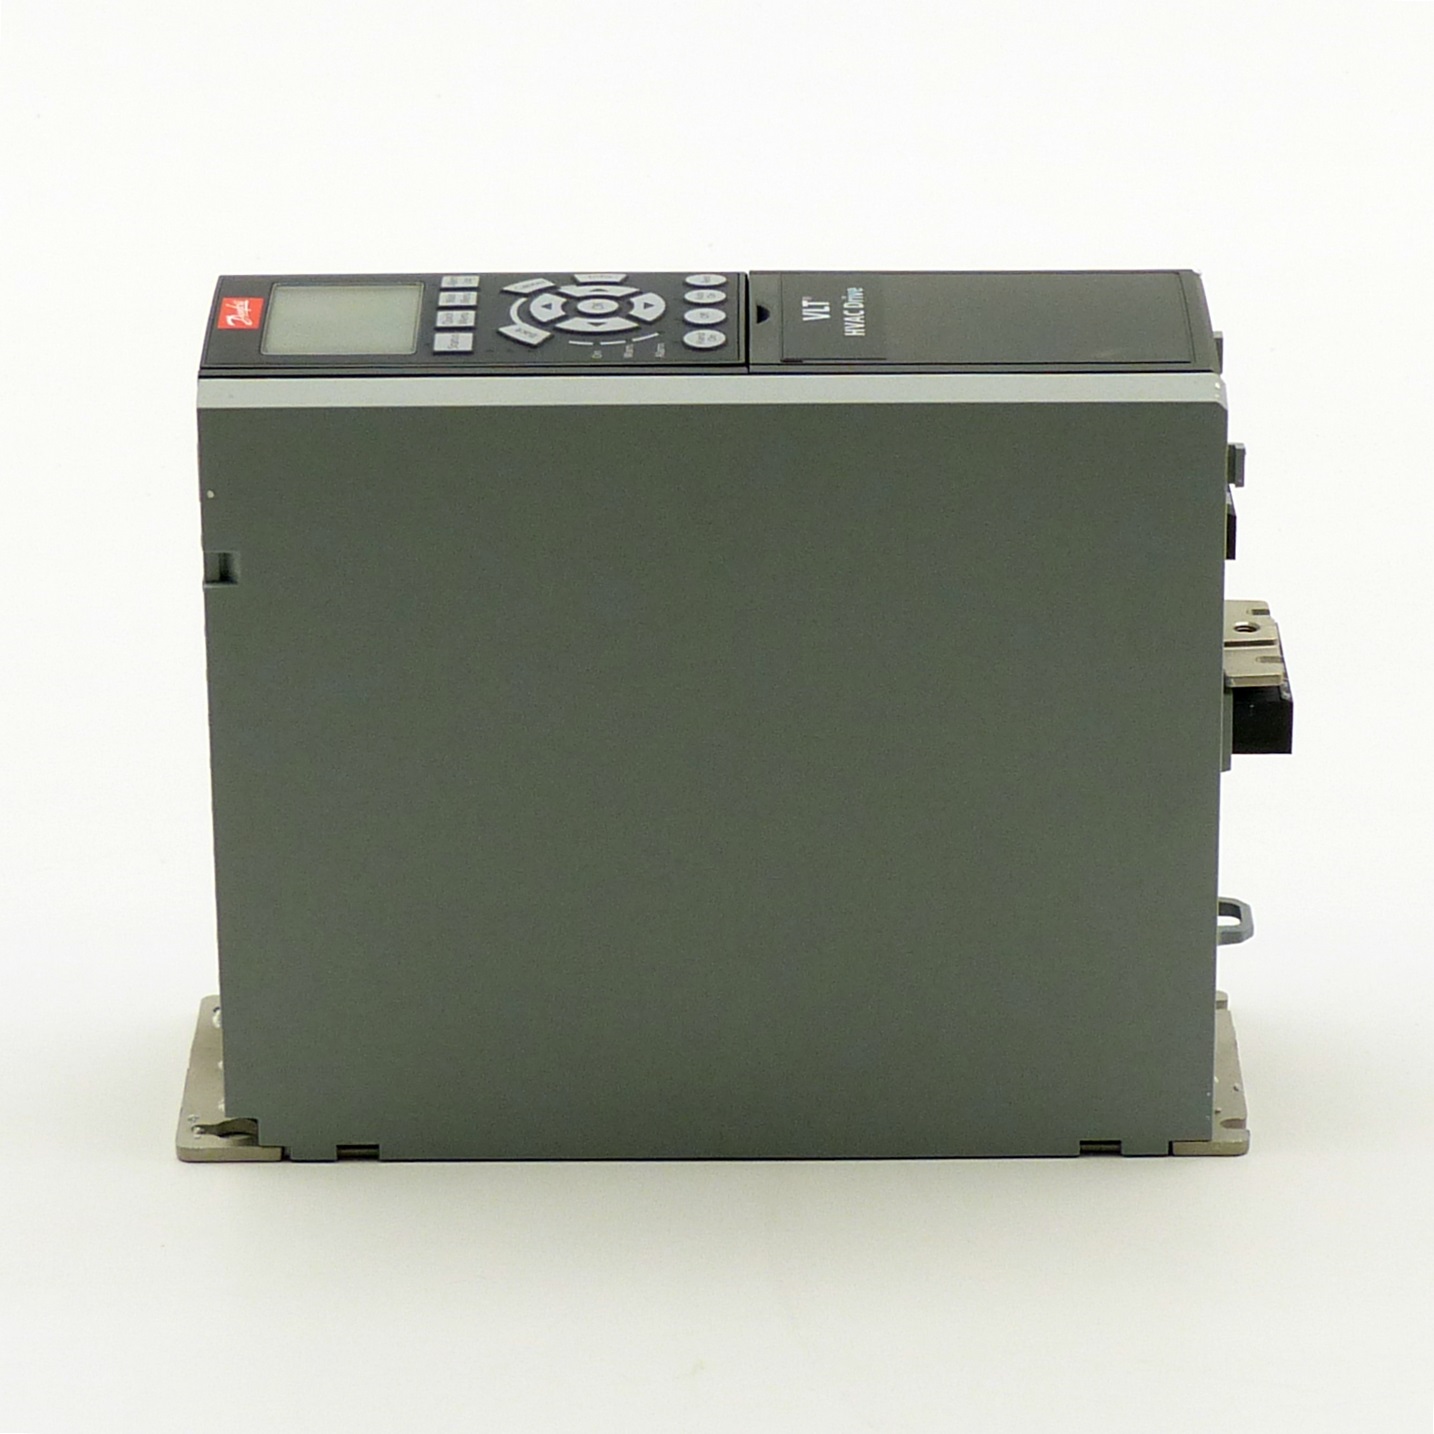 Frequency Converter FC 102 131B4217 